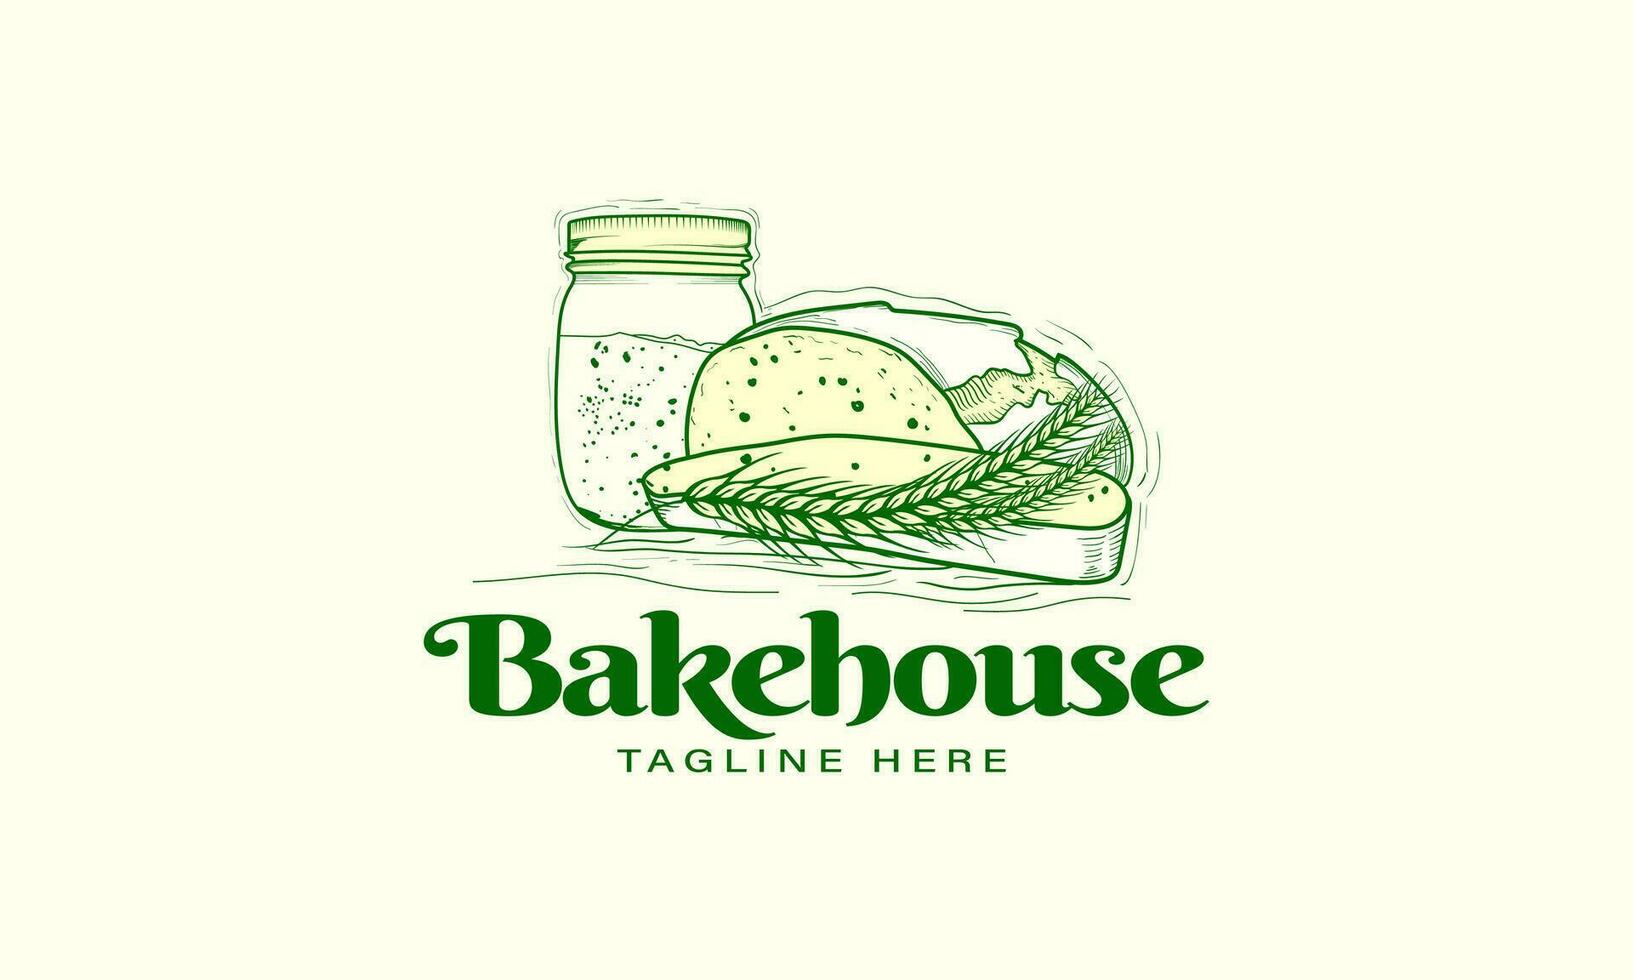 panadería logo modelo. panadería etiqueta o logo. logo para panadería comercio, panadería, restaurante. vector ilustración